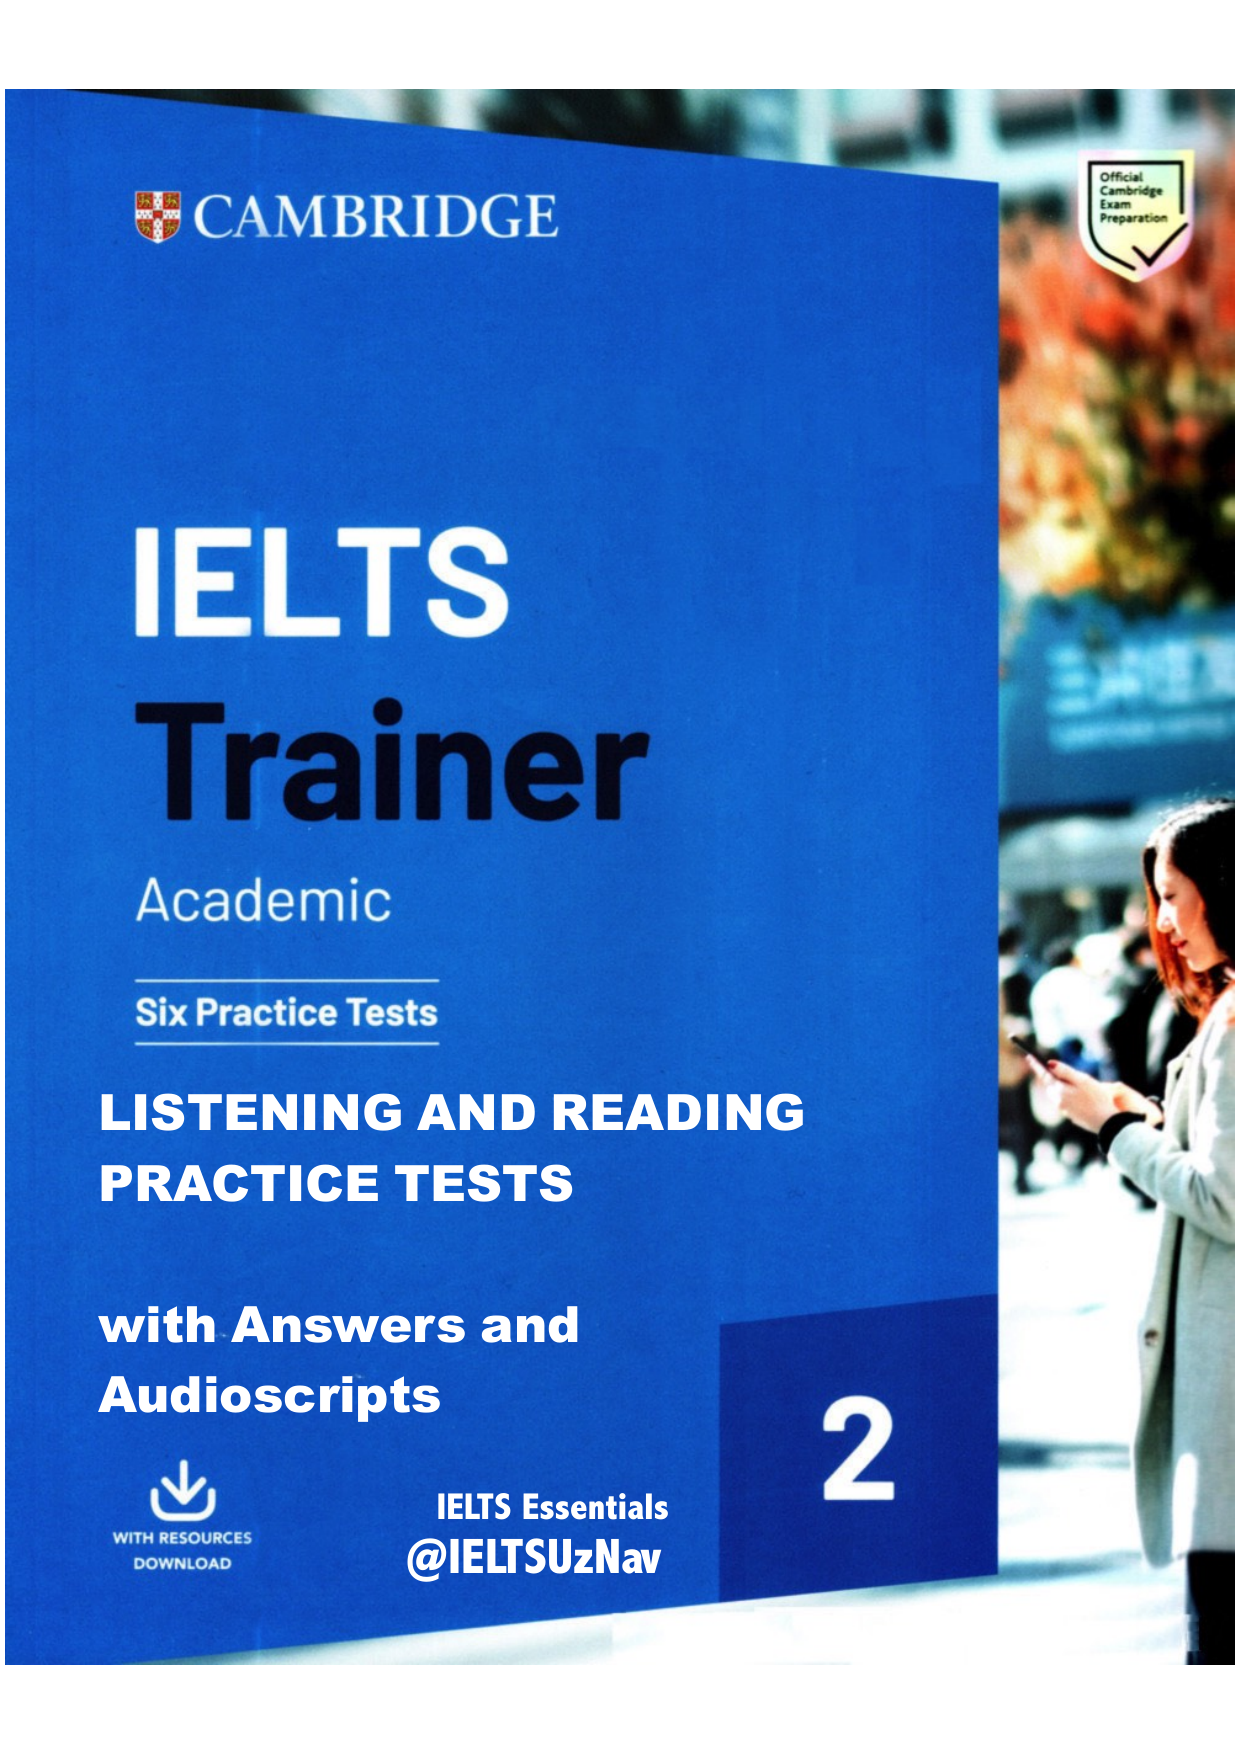 Ielts reading tests cambridge. IELTS Trainer 2 Academic Six Practice Tests. Cambridge IELTS Practice Tests for IELTS 2. Cambridge IELTS Trainer. Учебник по английскому языку Cambridge.